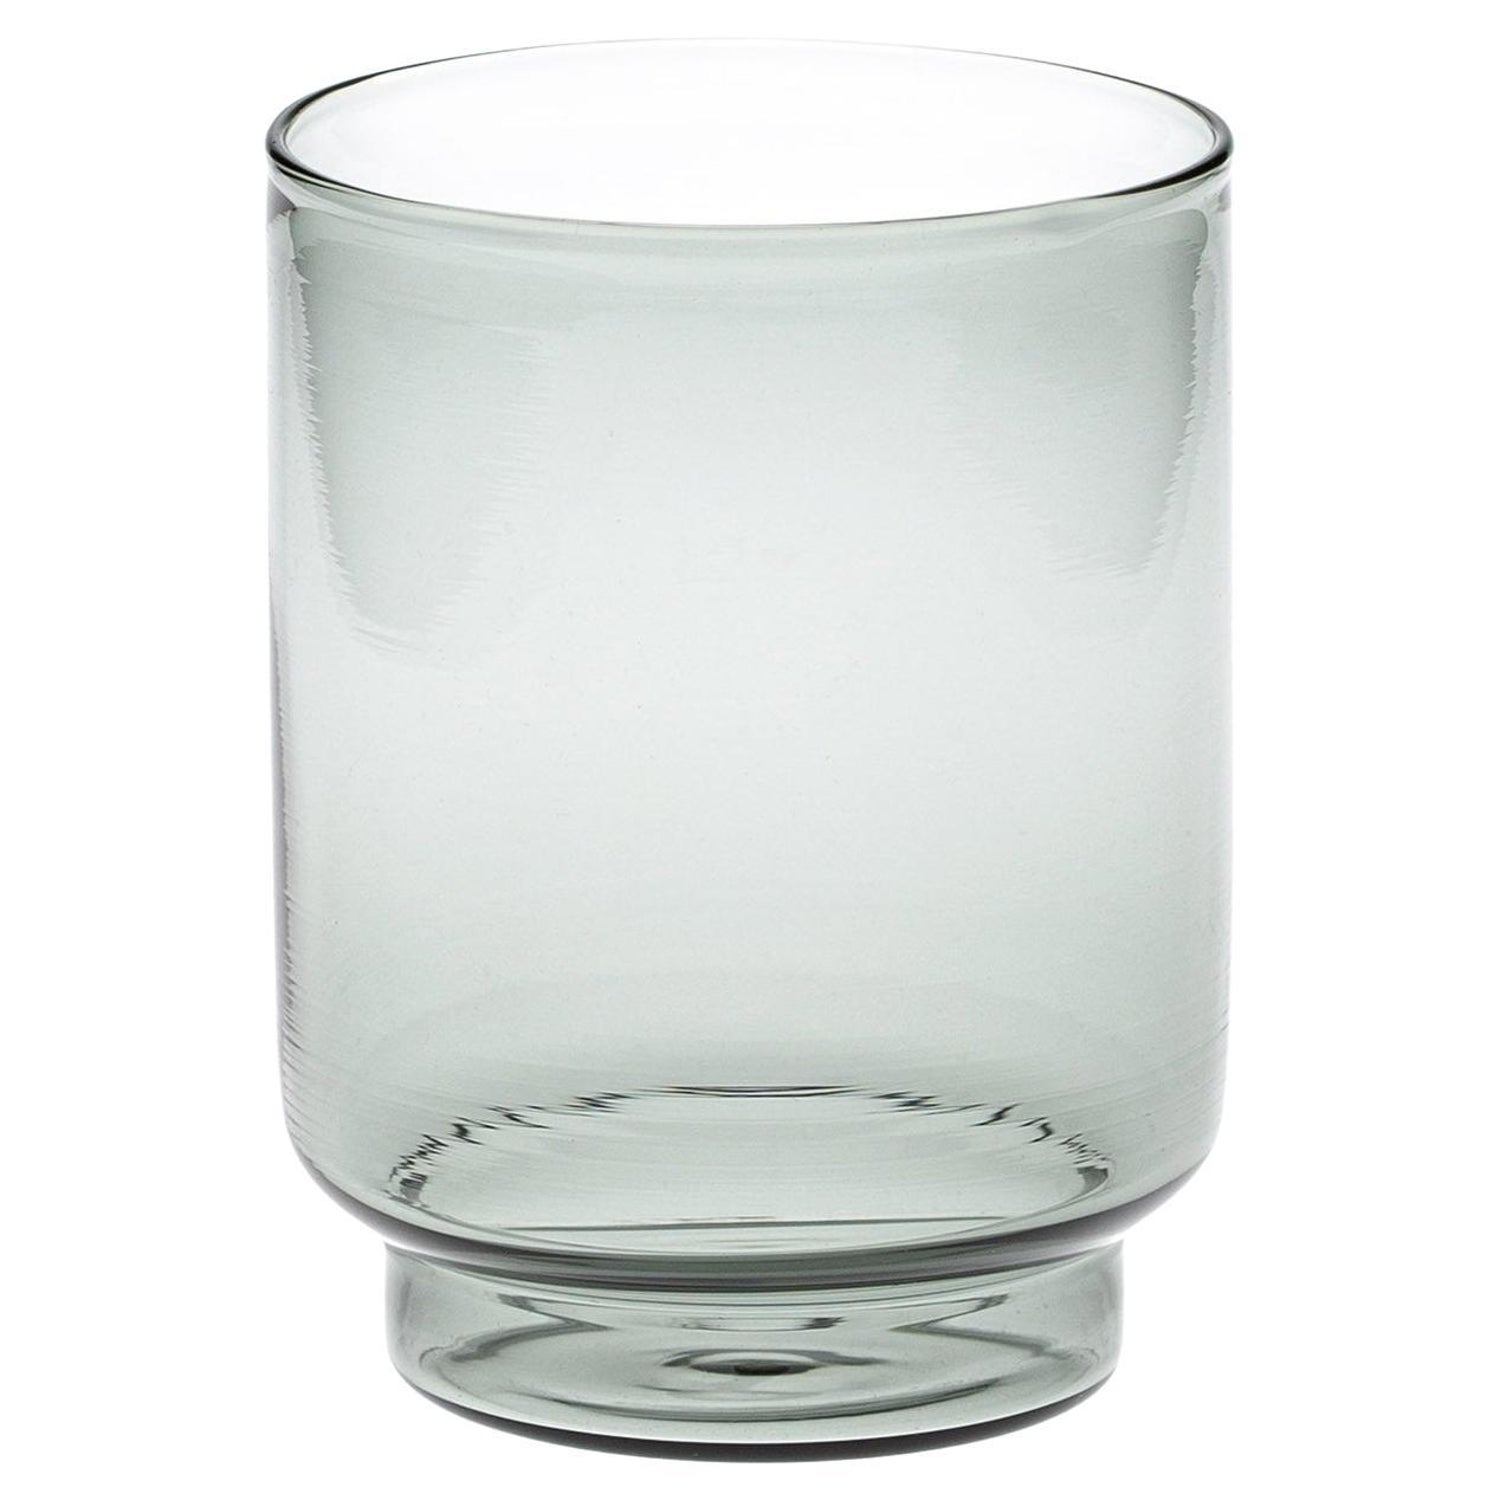 https://a.1stdibscdn.com/set-of-4-dolce-vita-grey-water-glasses-for-sale/f_17062/f_366755121697631869553/f_36675512_1697631869895_bg_processed.jpg?width=1500